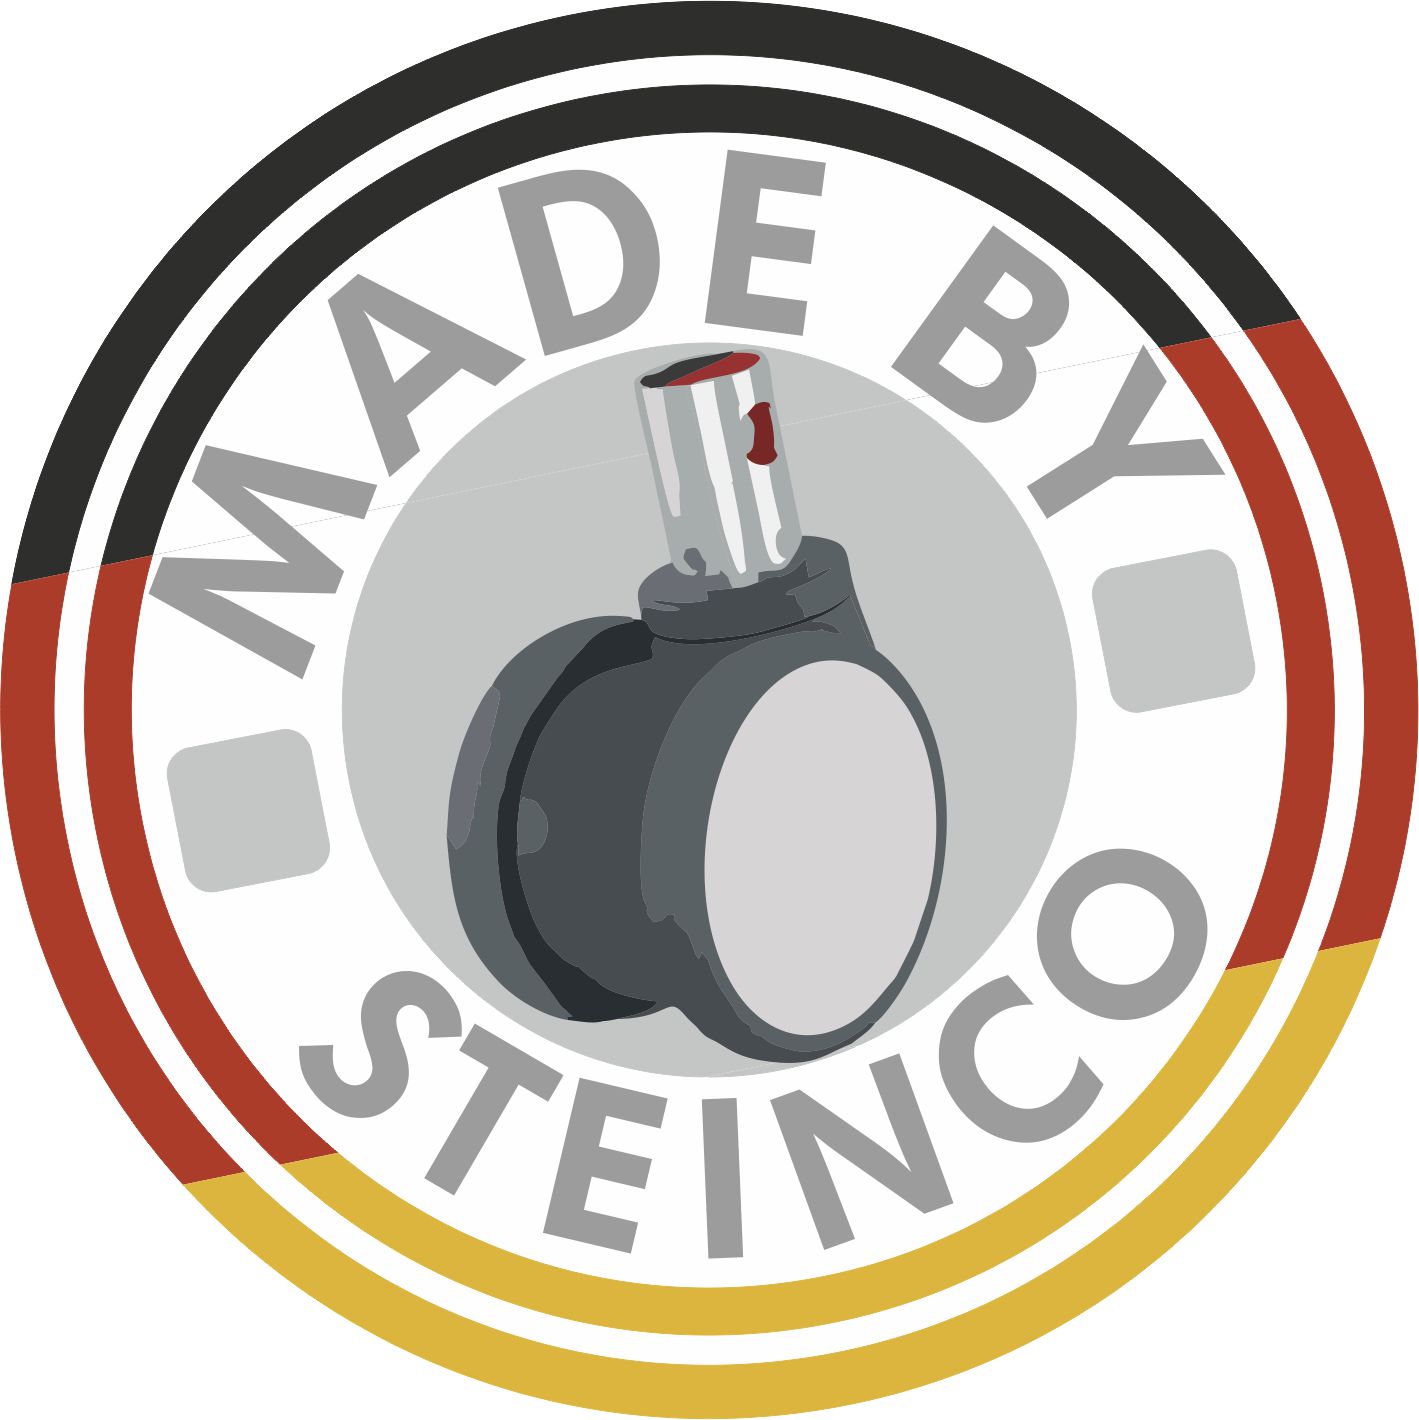 [Translate to Spanisch:] Rollen und Räder - Made by STEINCO and Made in Germany